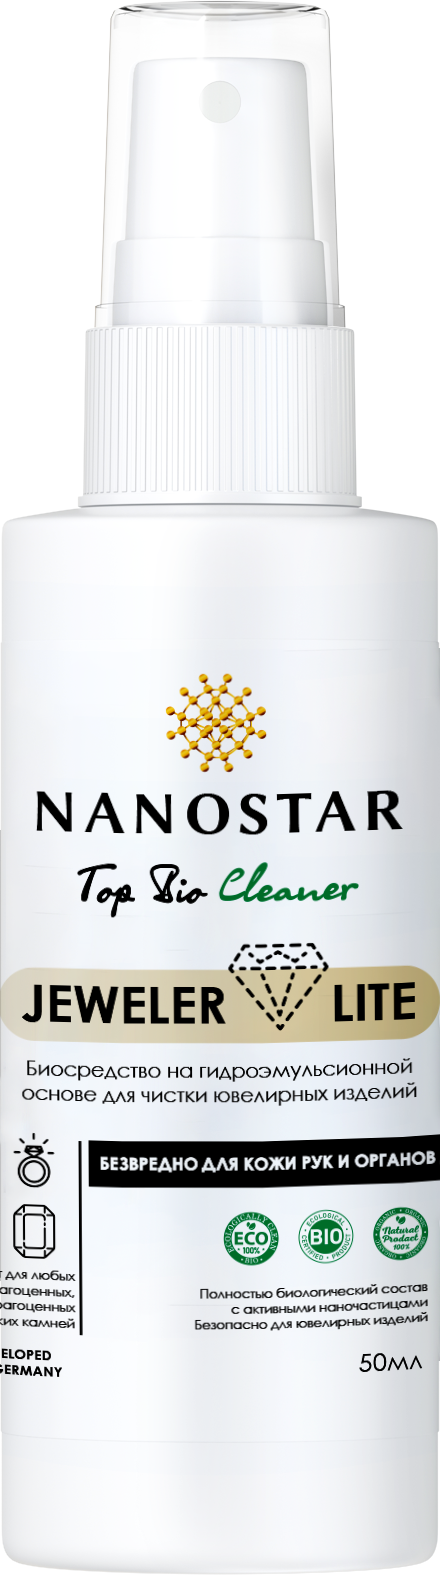 NANOSTAR - ювелирная косметика Top Bio Cleaner